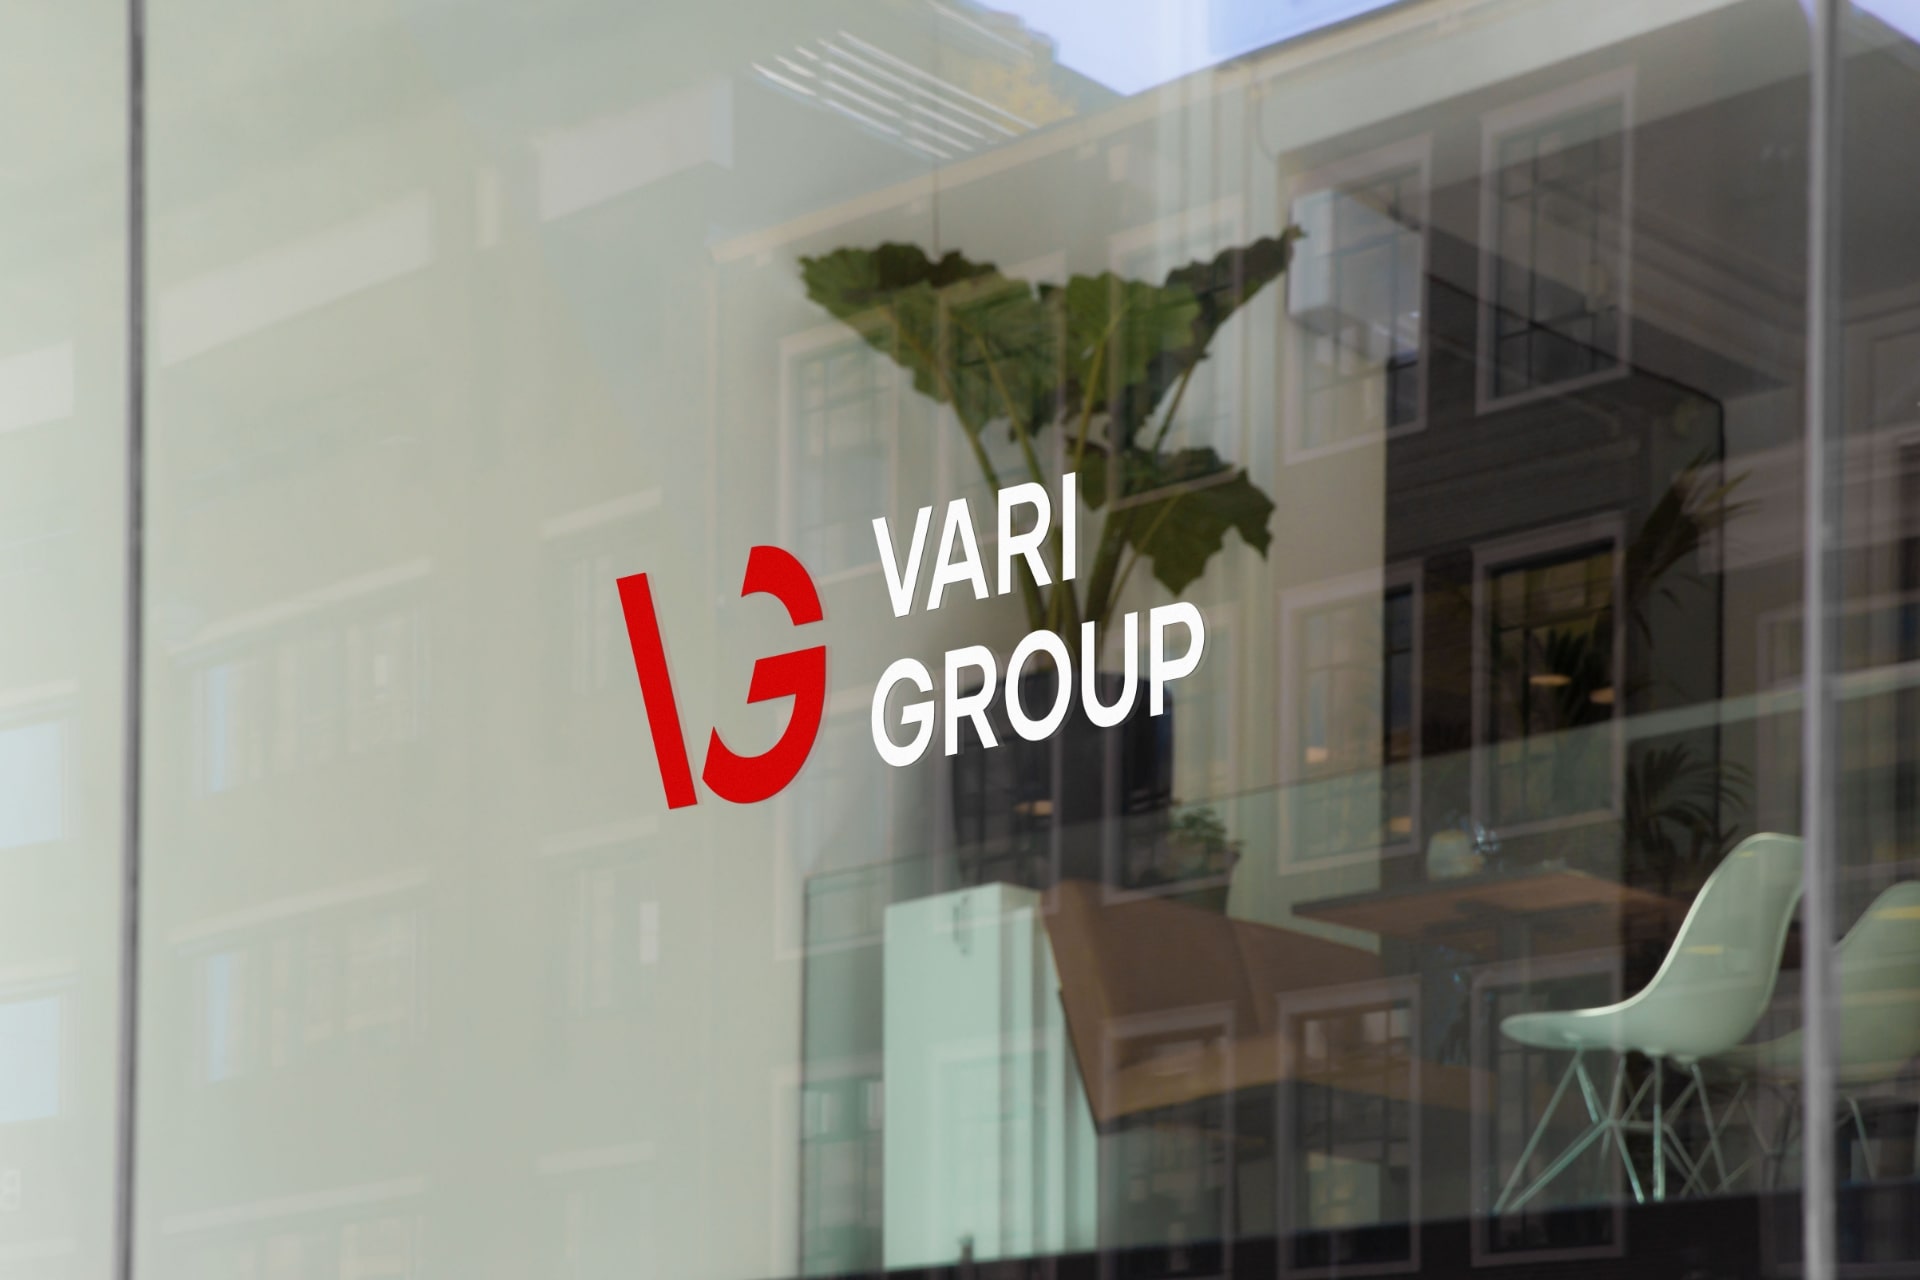 Vari Group